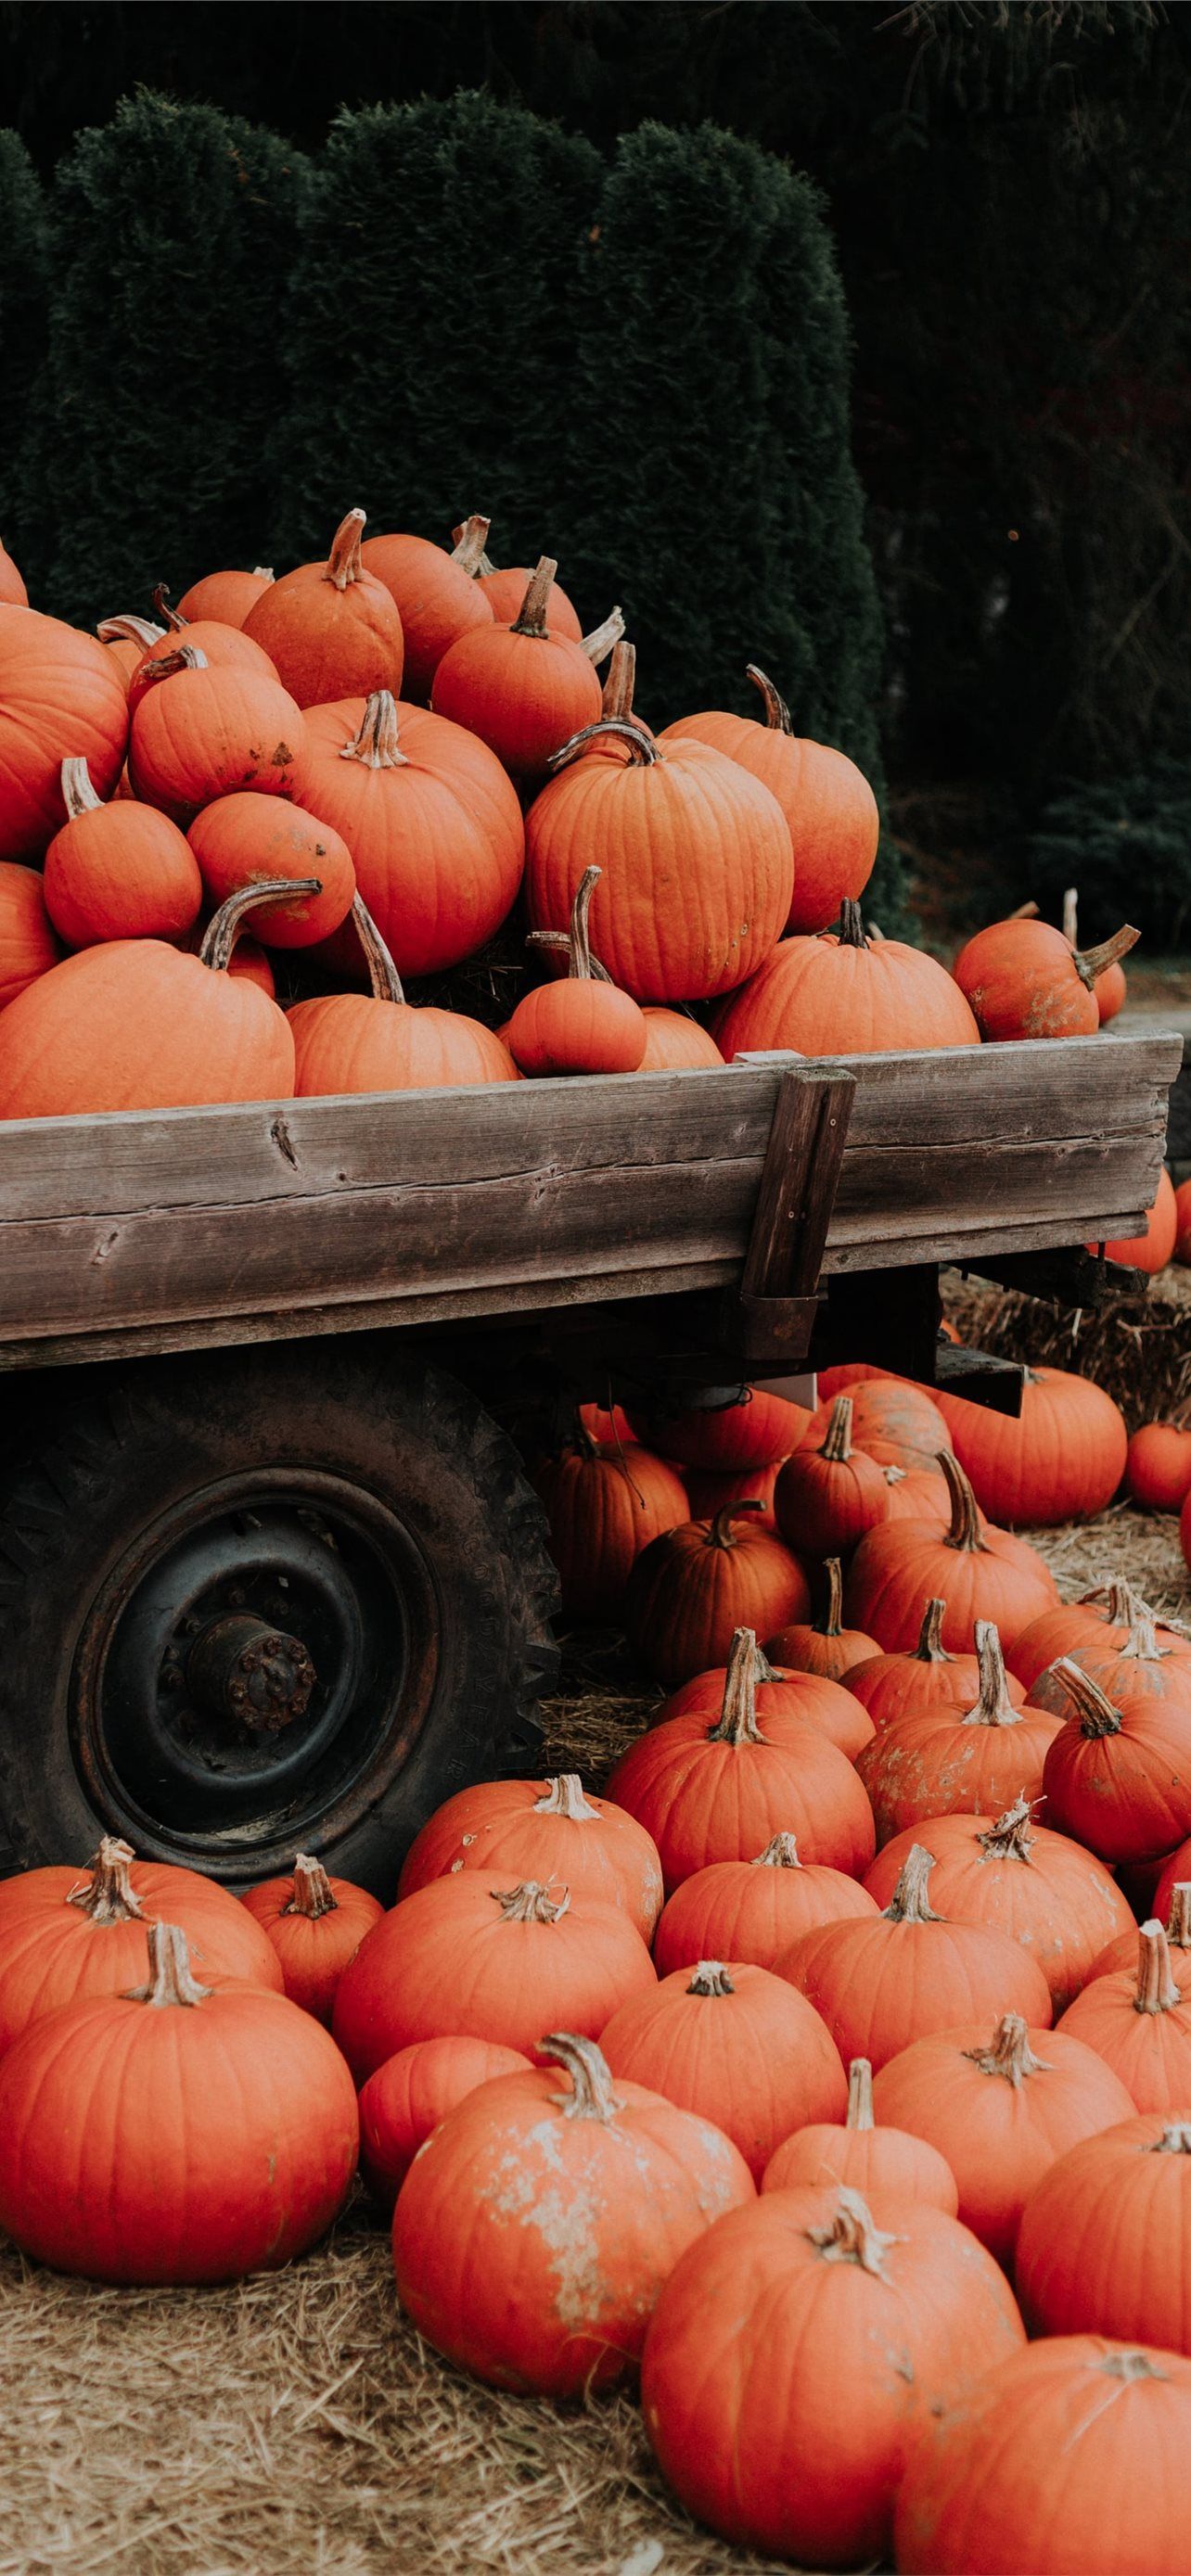 A cart full of pumpkins on a farm. - Fall, fall iPhone